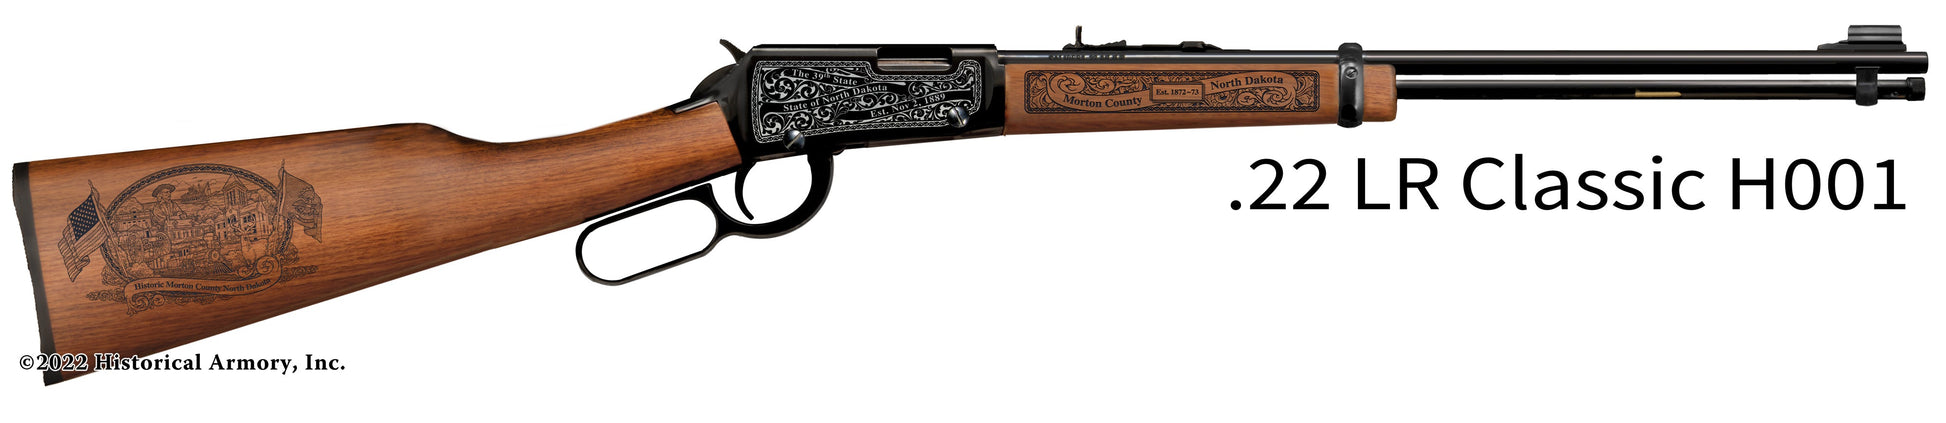 Morton County North Dakota Engraved Henry H001 Rifle